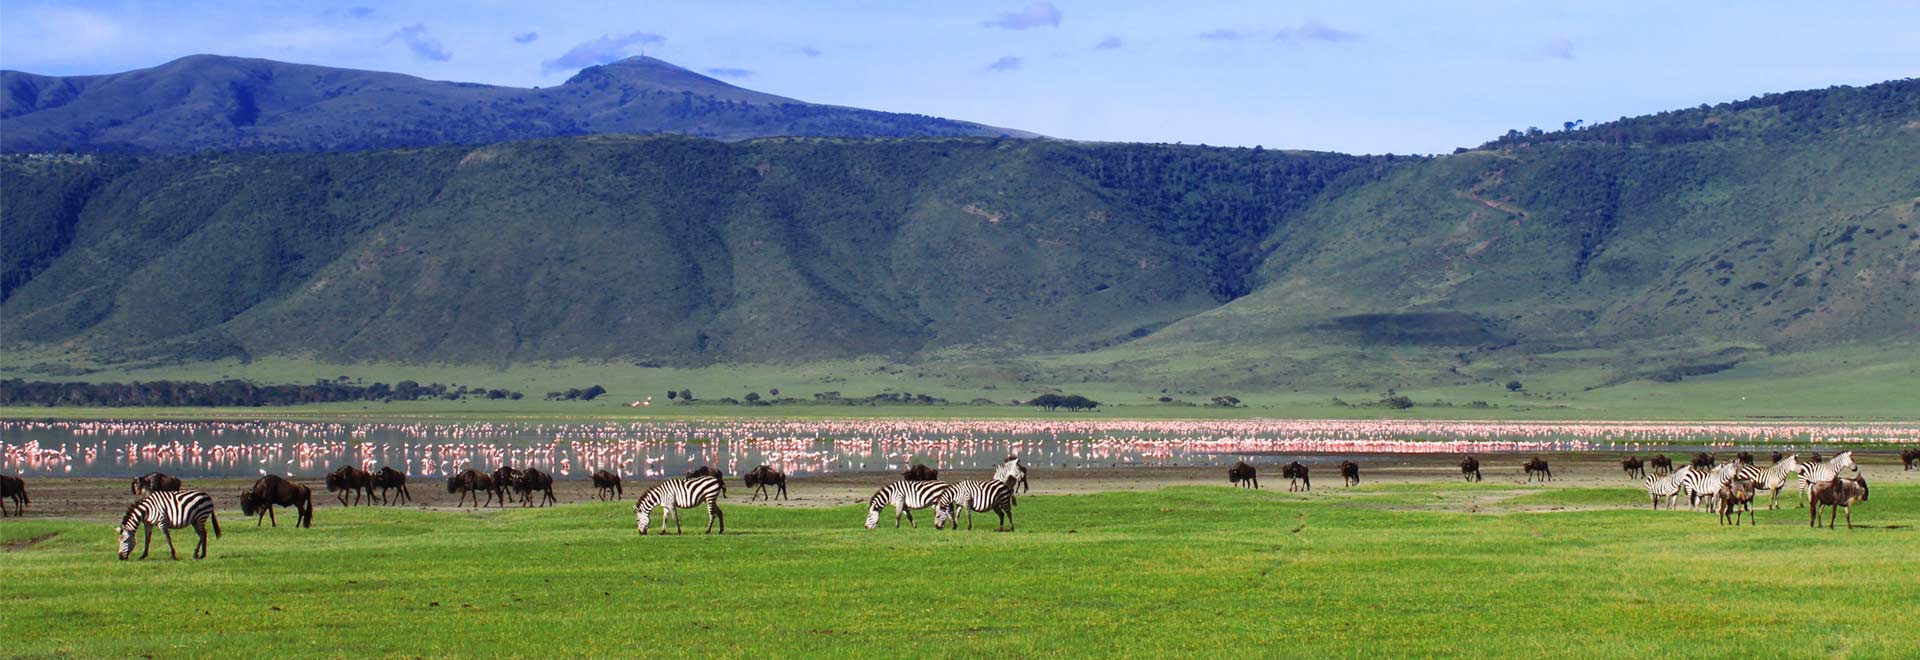 Africa Tanzania Ngorongoro Crater